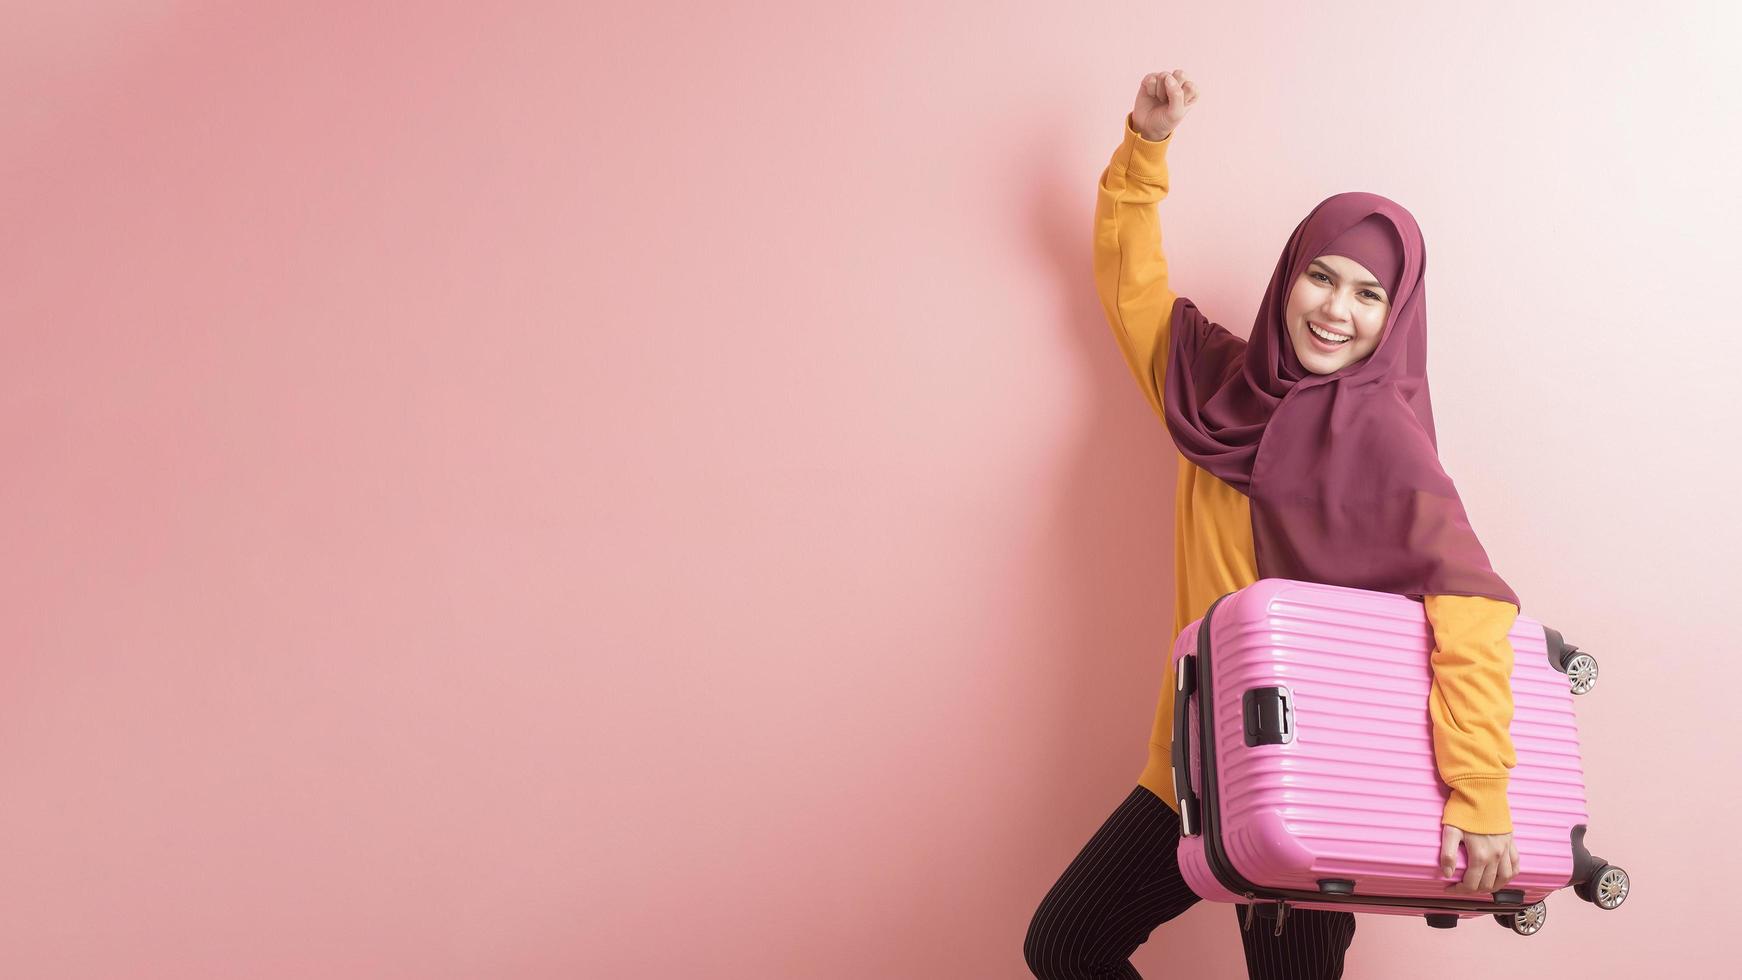 muslimsk kvinna med hijab håller bagage på rosa bakgrund, människor reser koncept foto